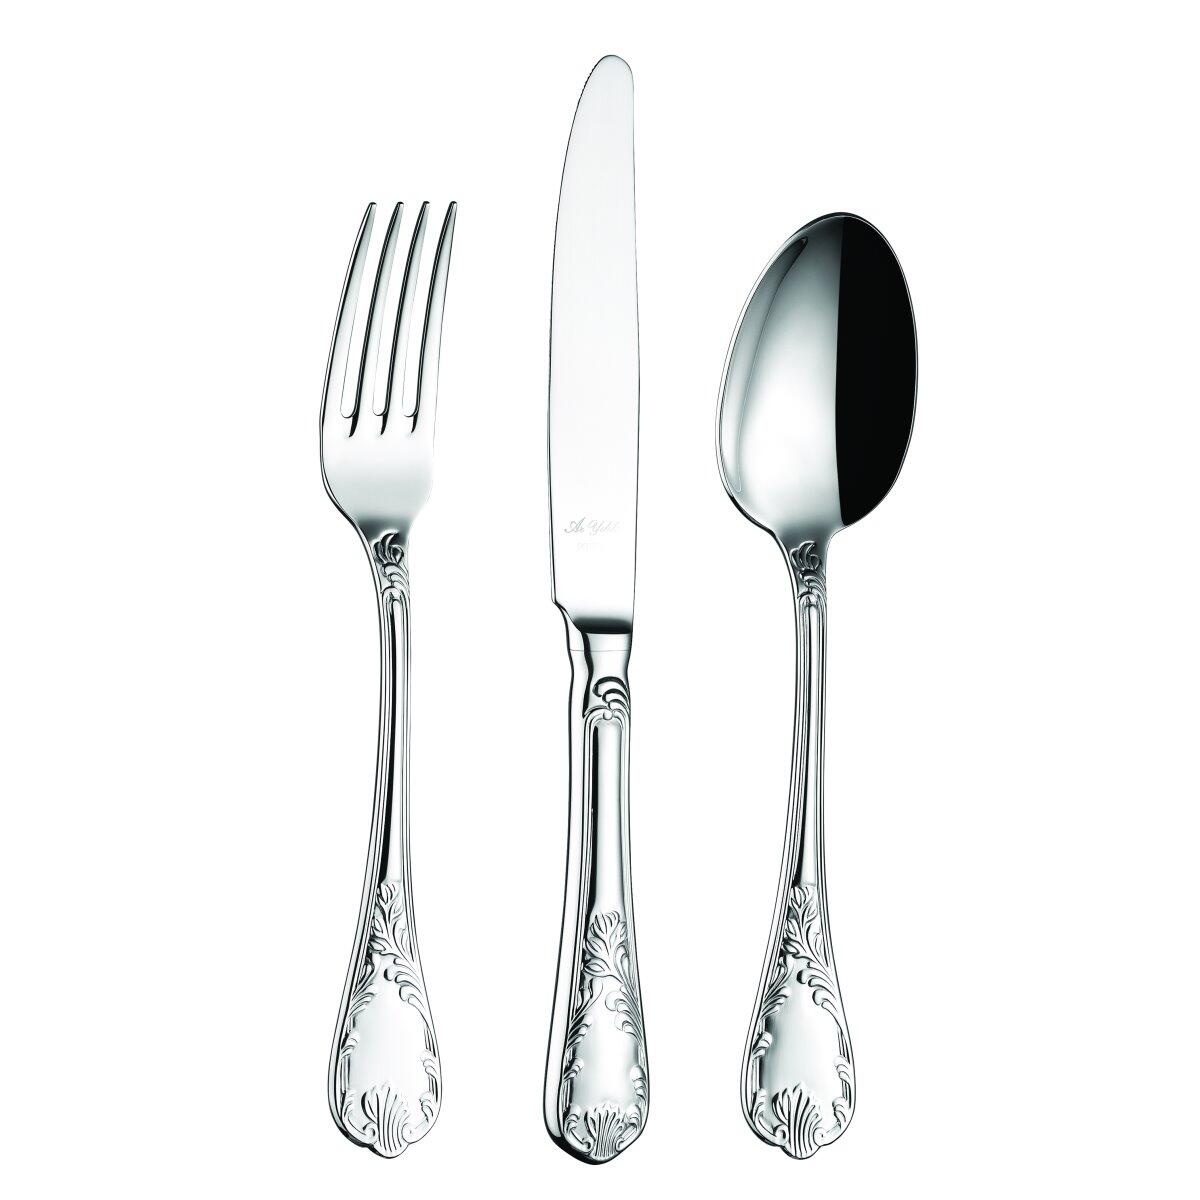 Aryıldız Pera Prestige Fork Spoon Knife Plain 89 Pieces